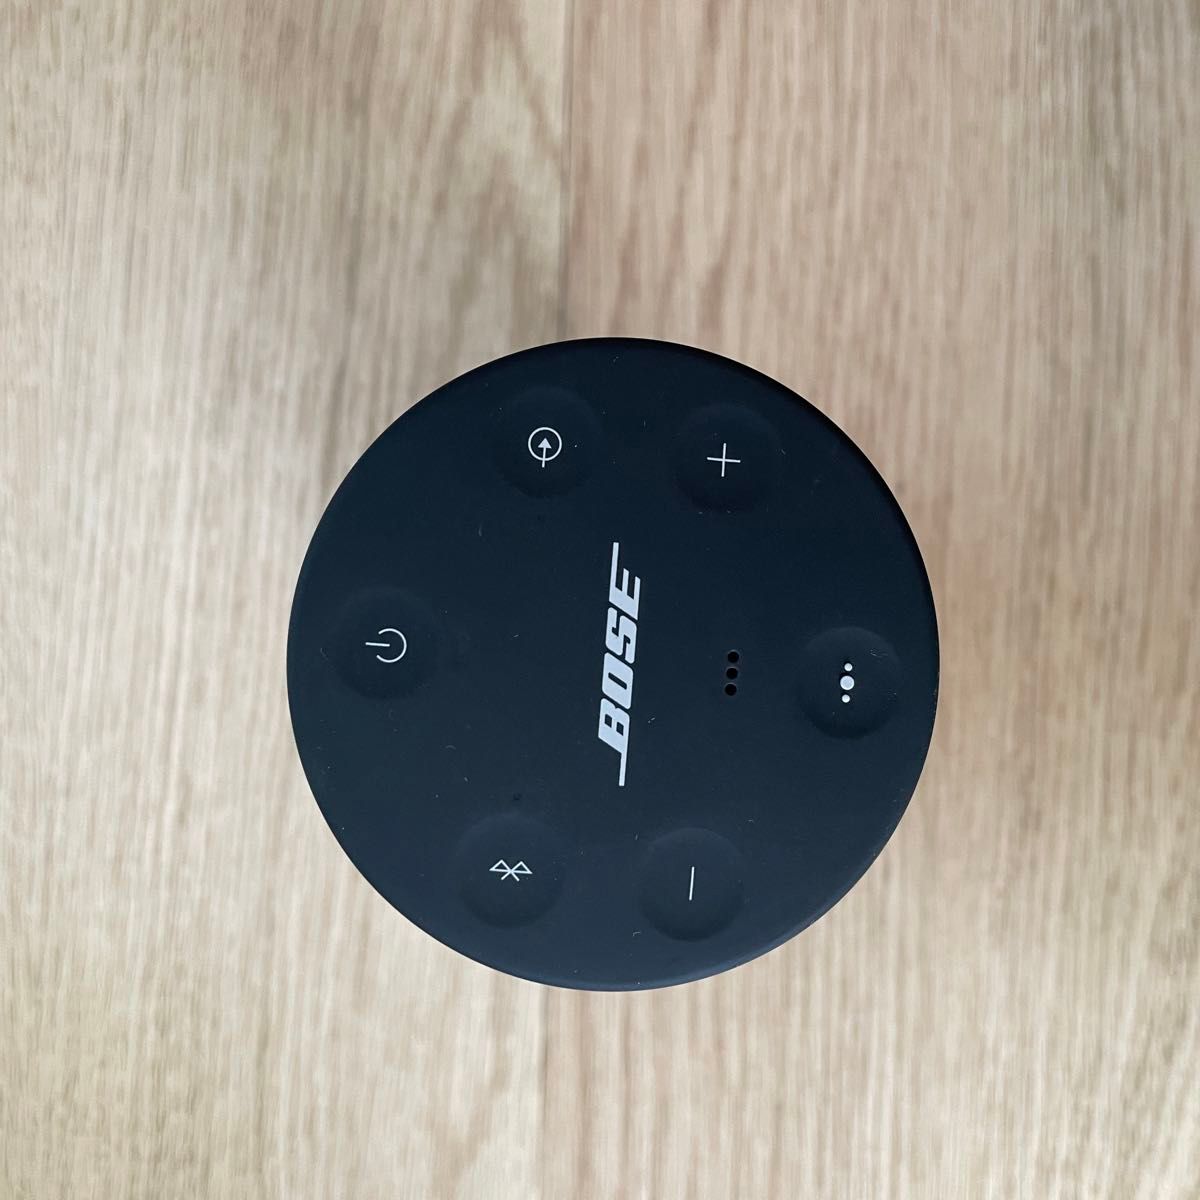 The Bose SoundLink Revolve the Portable Bluetooth Speaker 